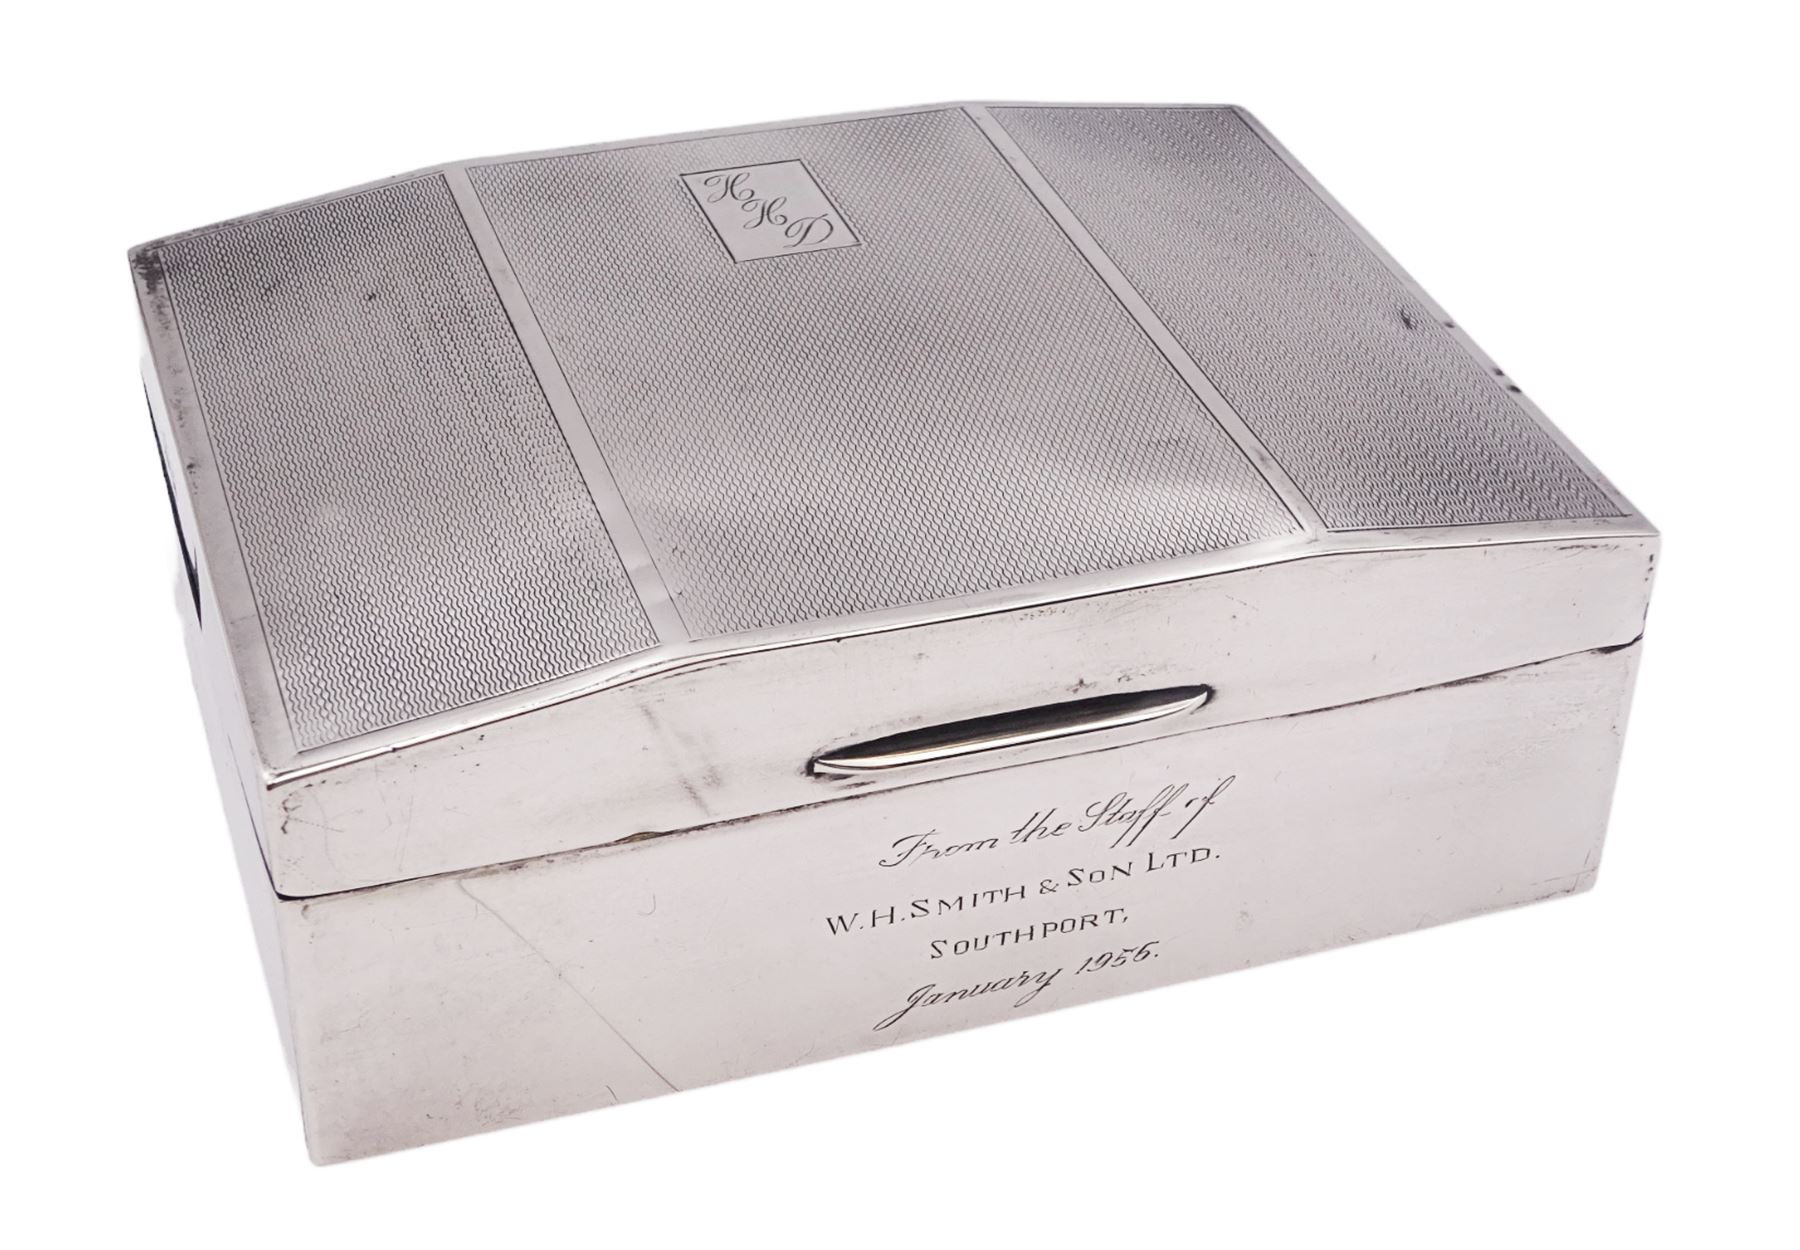 Mid 20th century silver mounted cigarette box